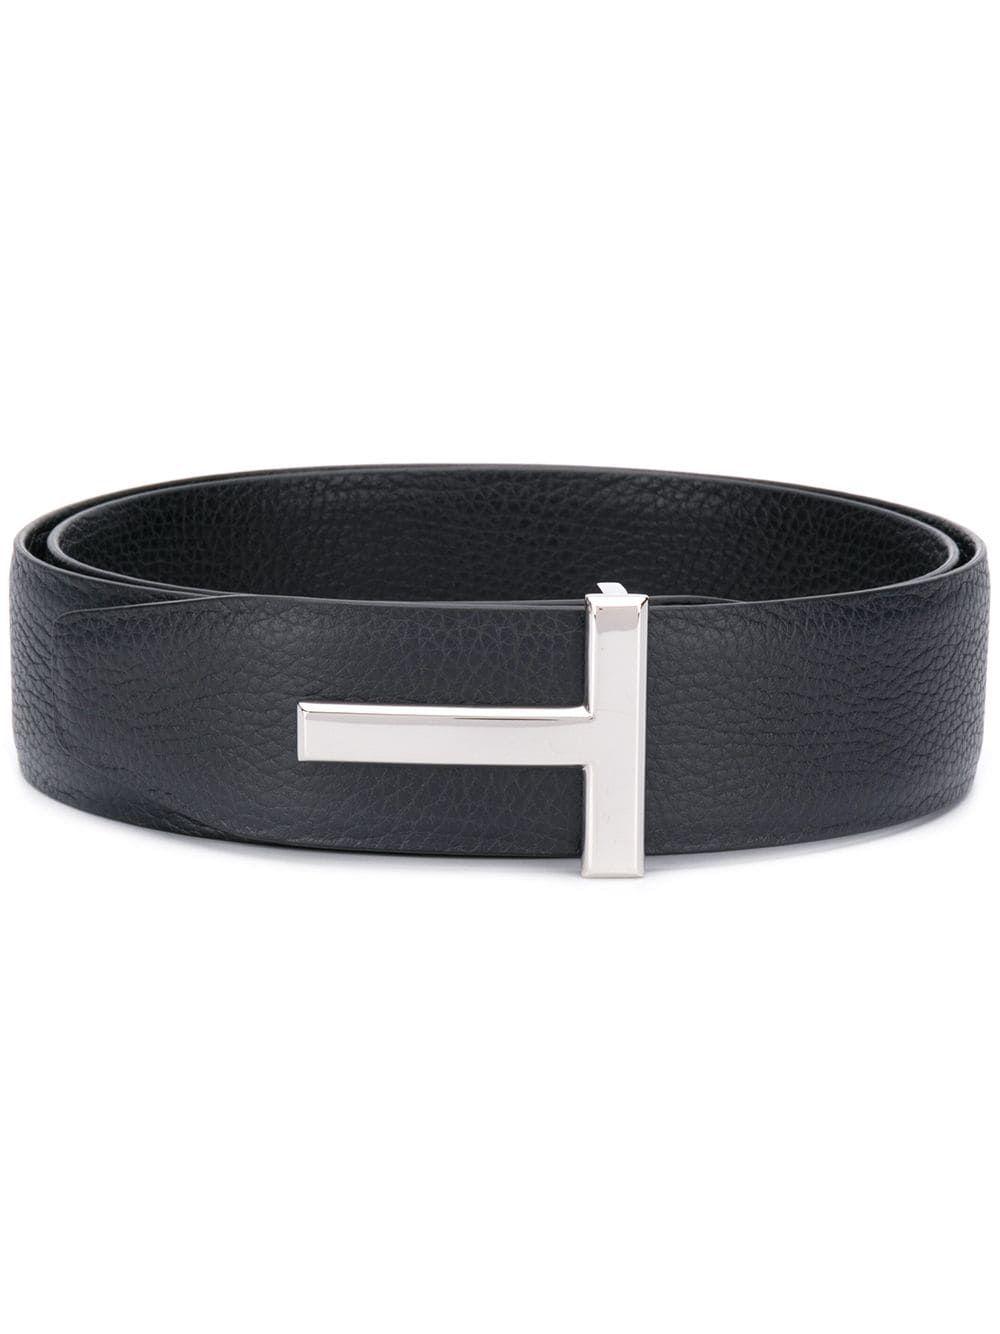 Tom Ford Leather Reversible Belt in Black for Men - Save 18% - Lyst